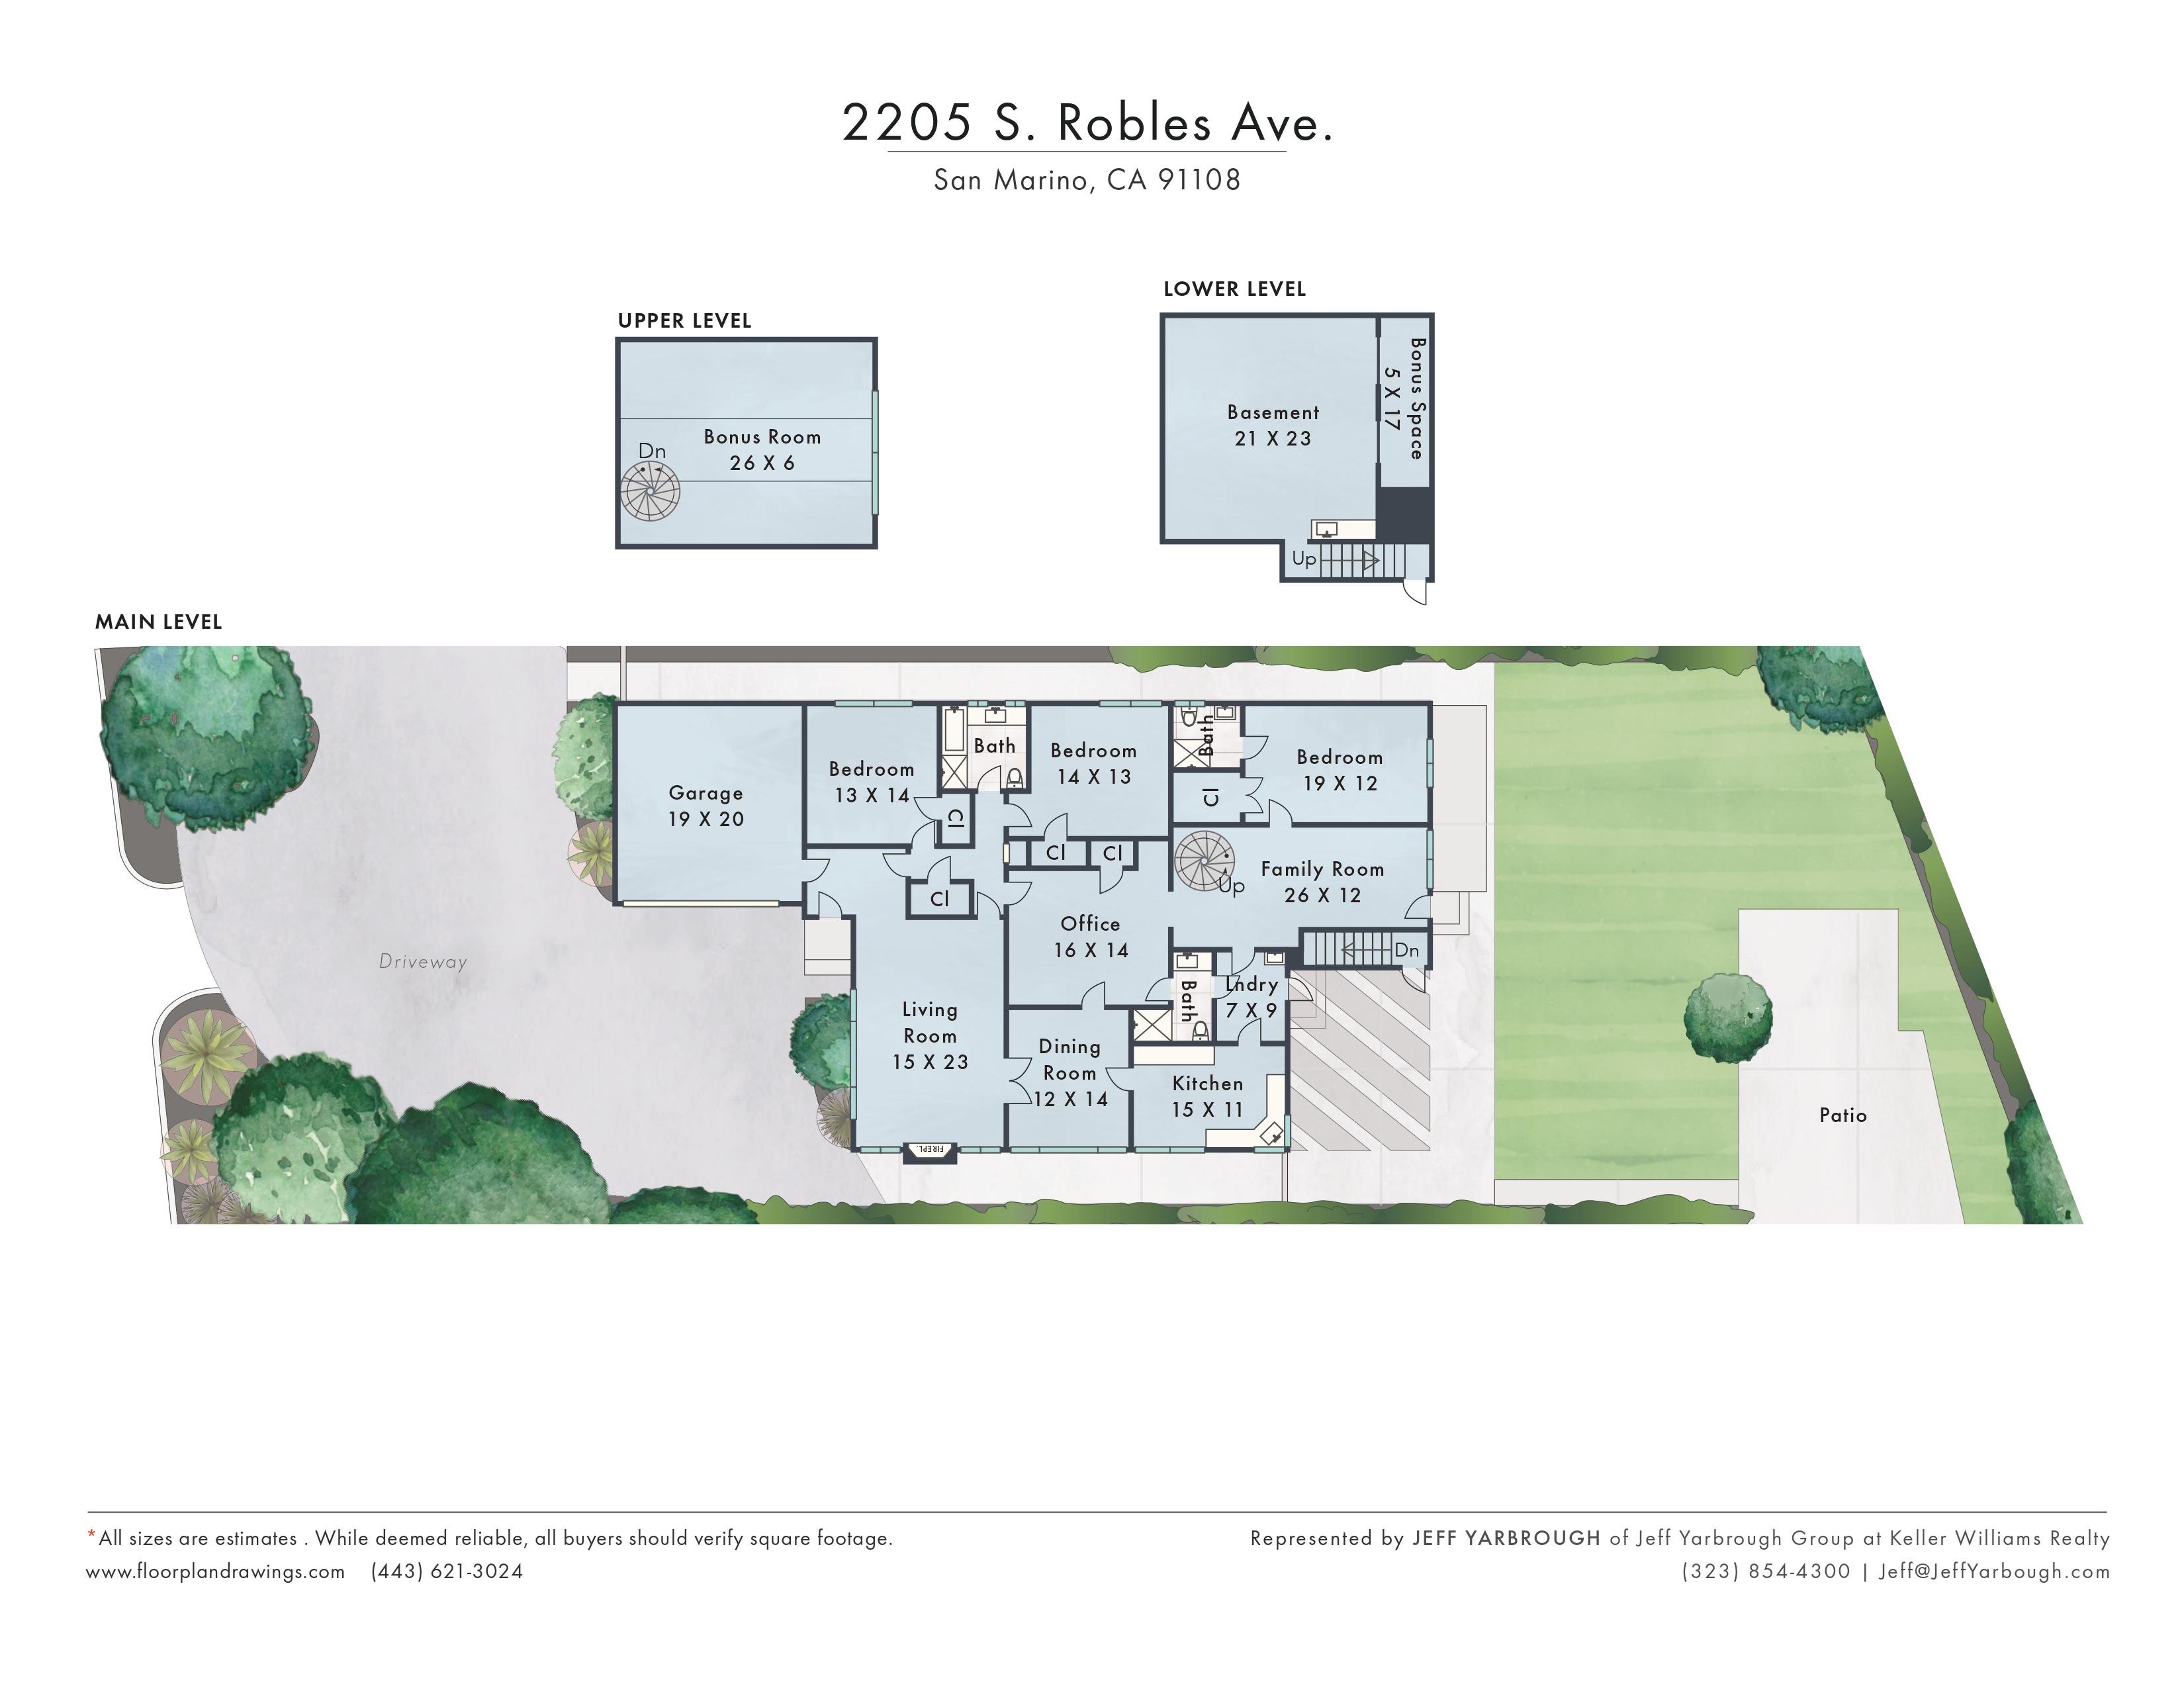 2205 los robles floor and site plan